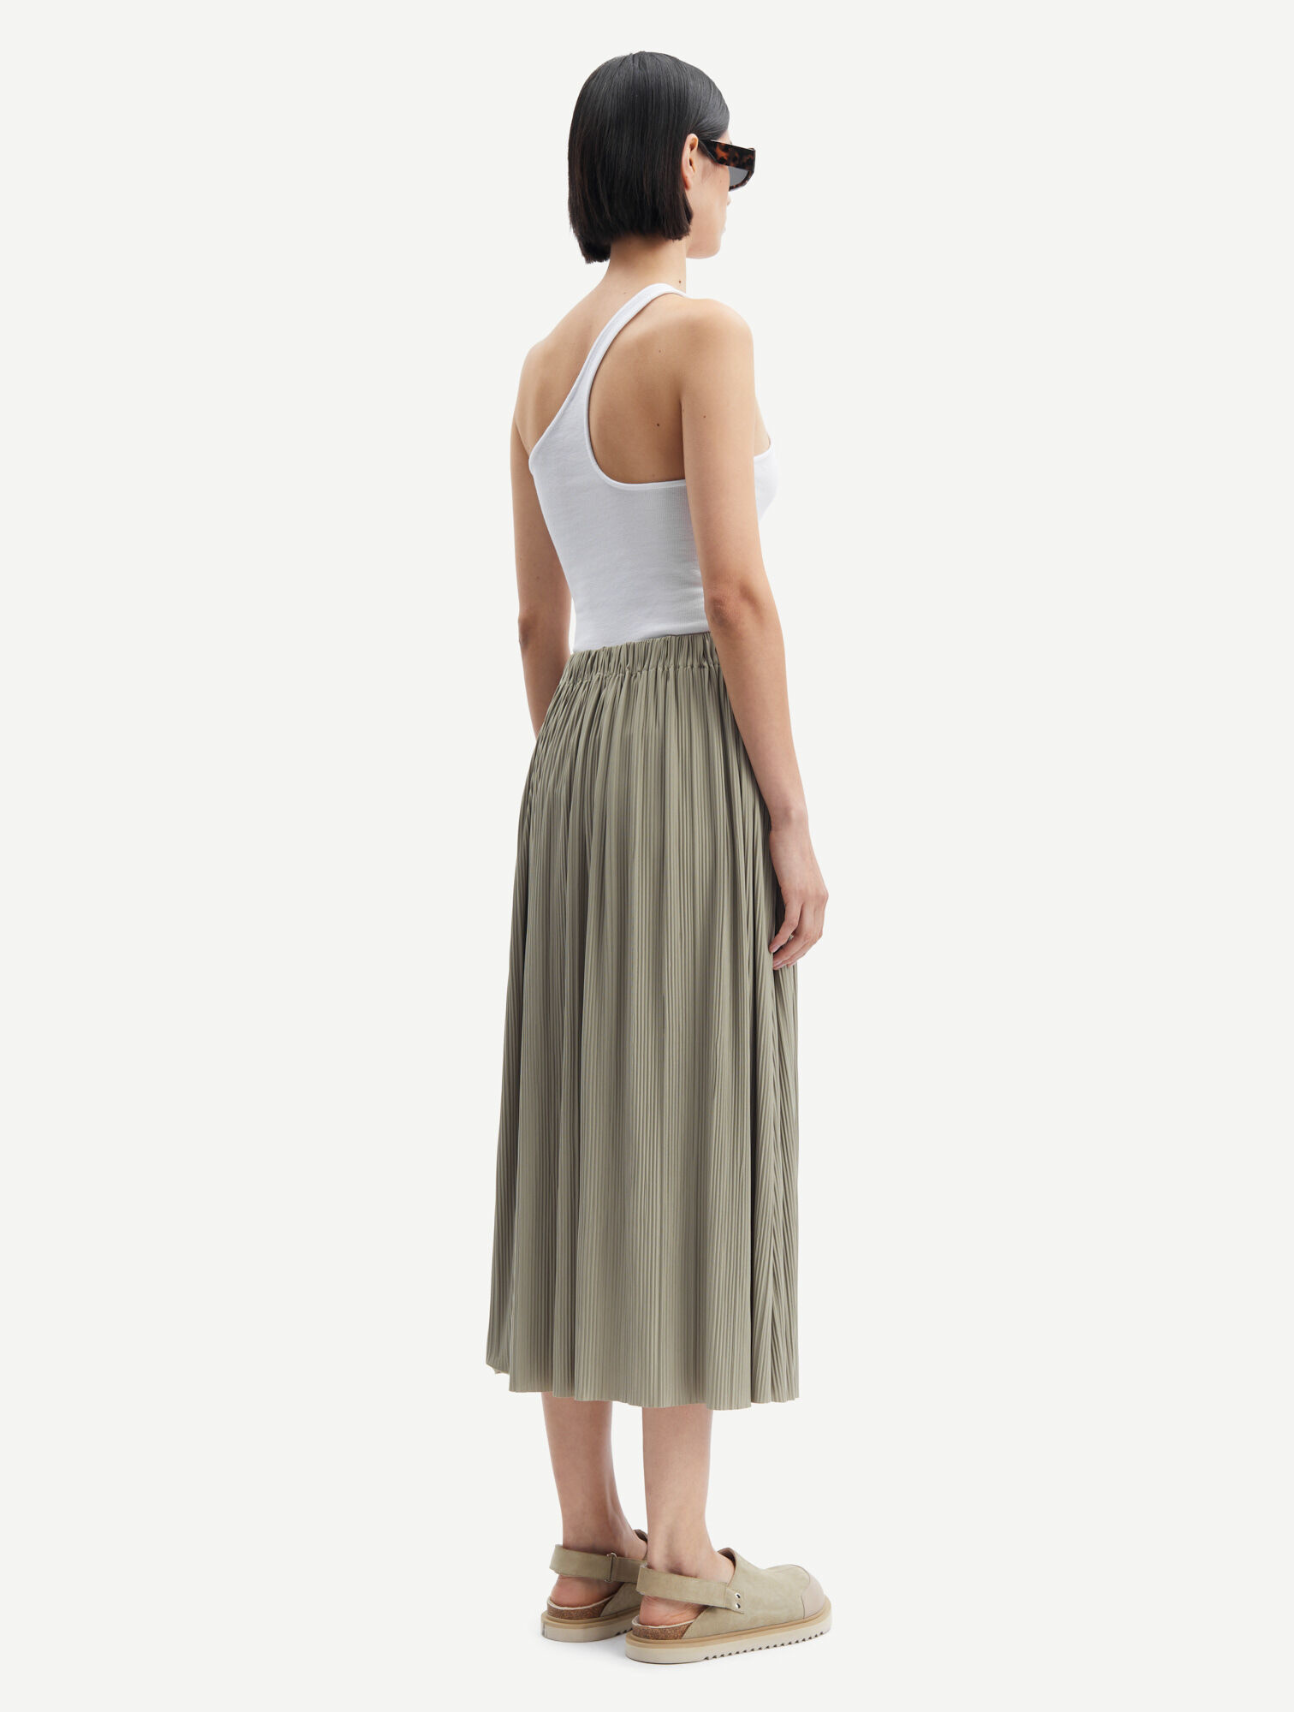 Uma Skirt